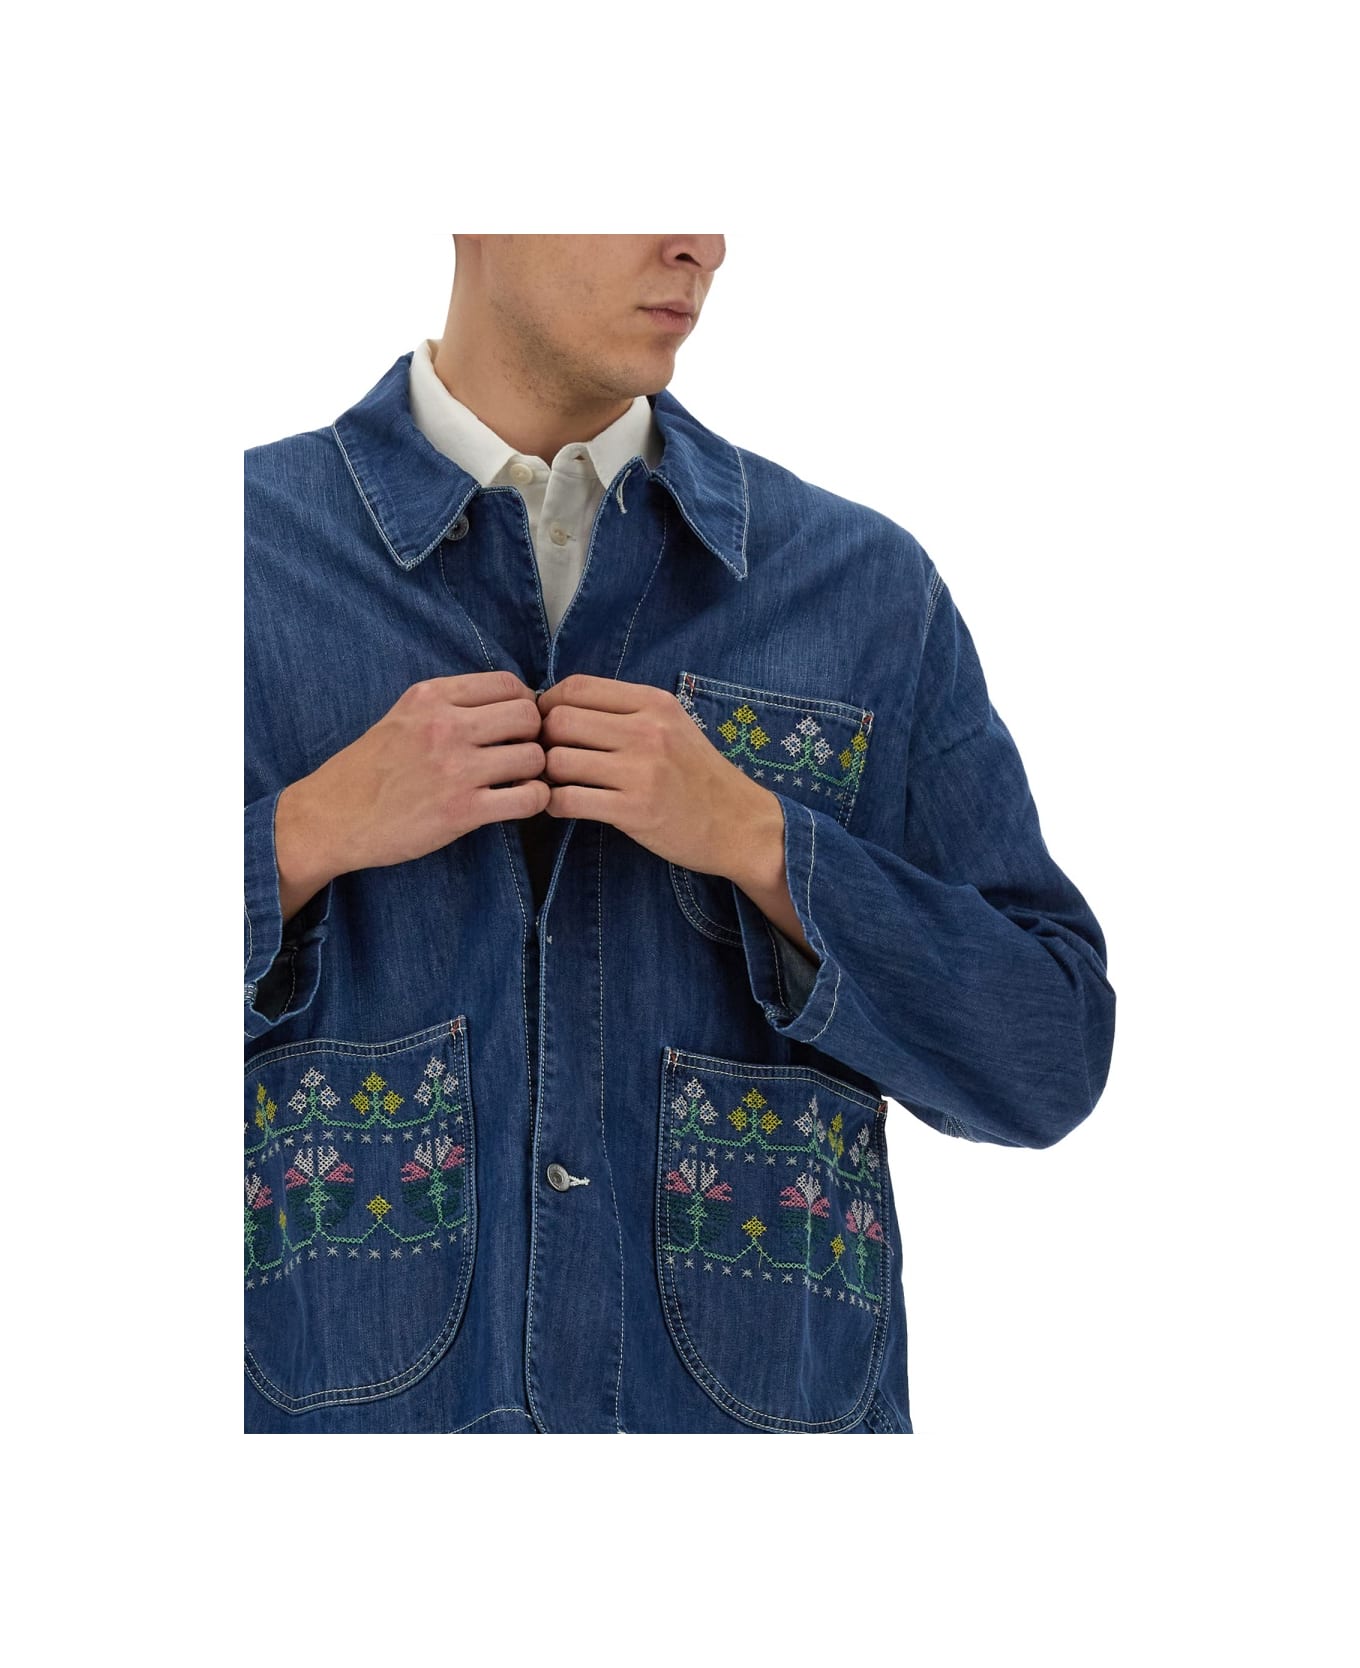 YMC Jacket With Embroidery - DENIM ジャケット